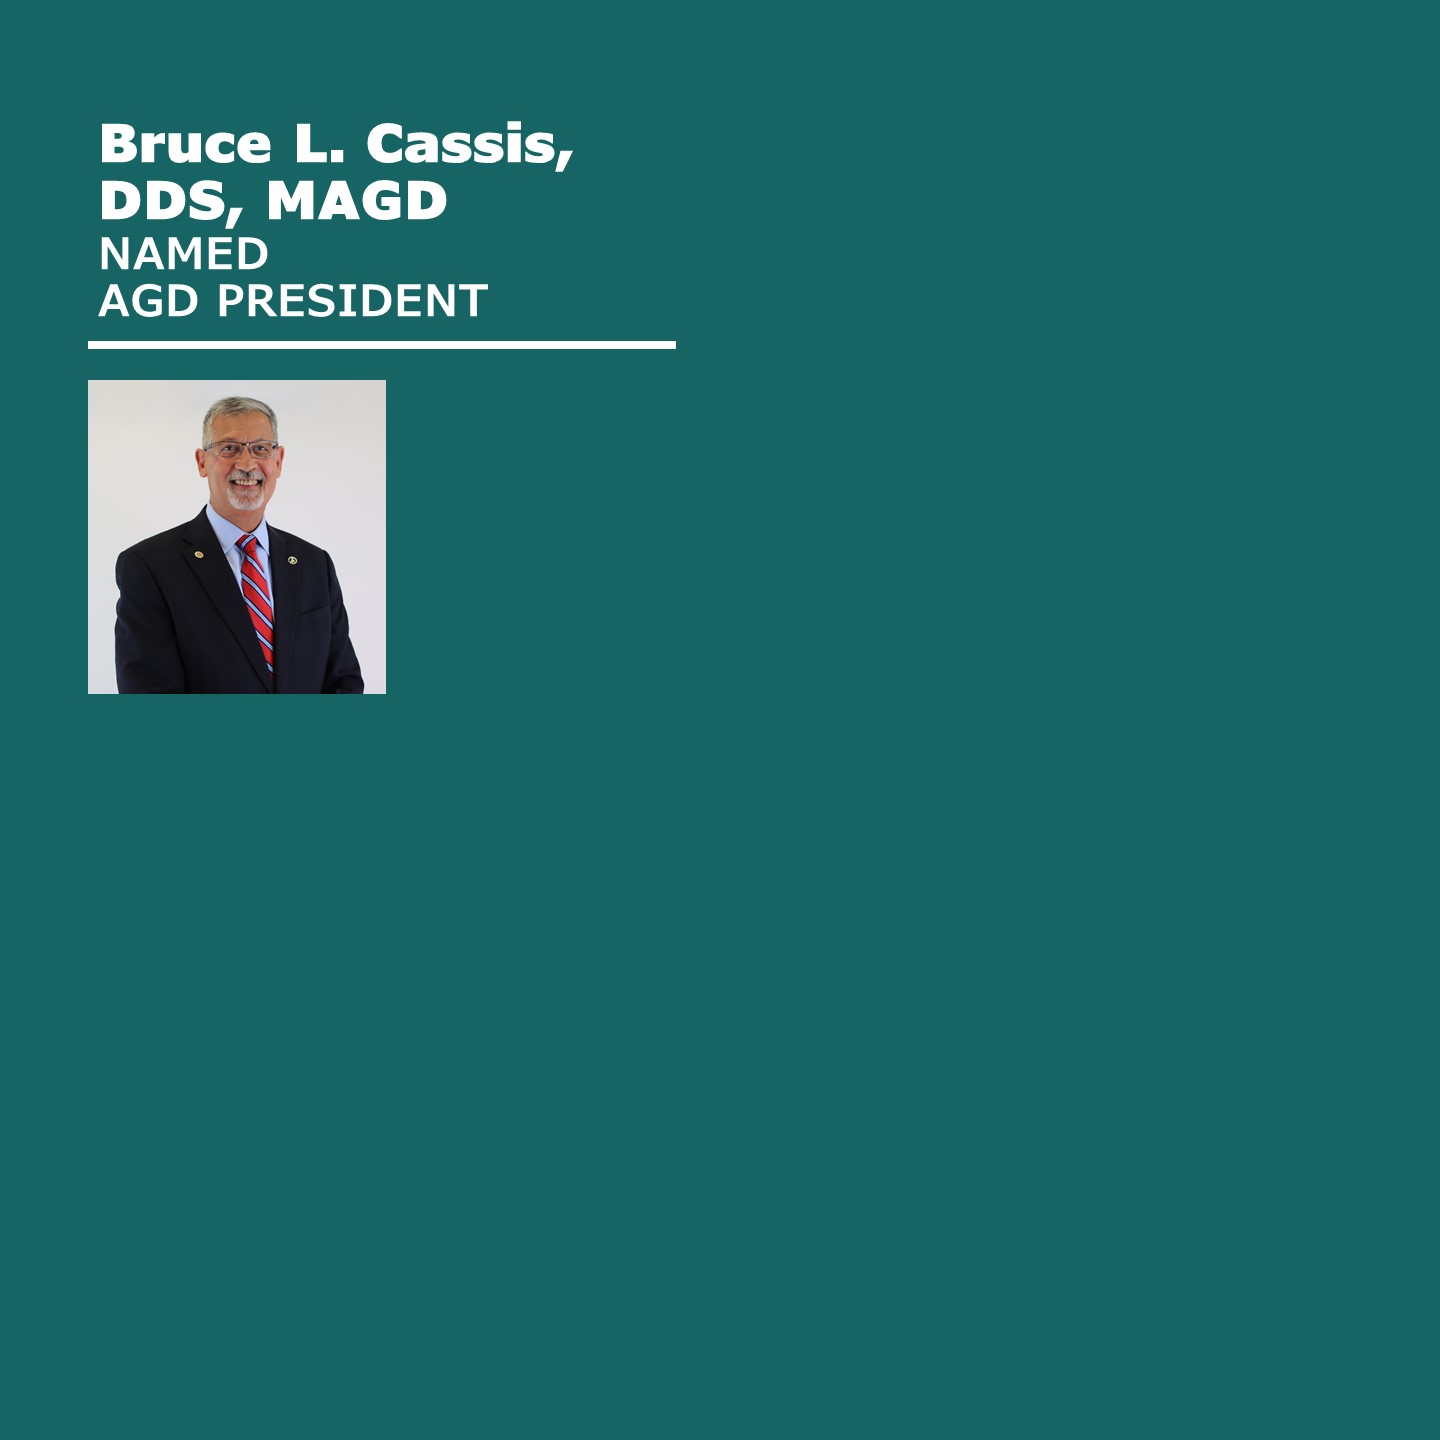 Bruce L. Cassis, DDS, FAGD, AGD President